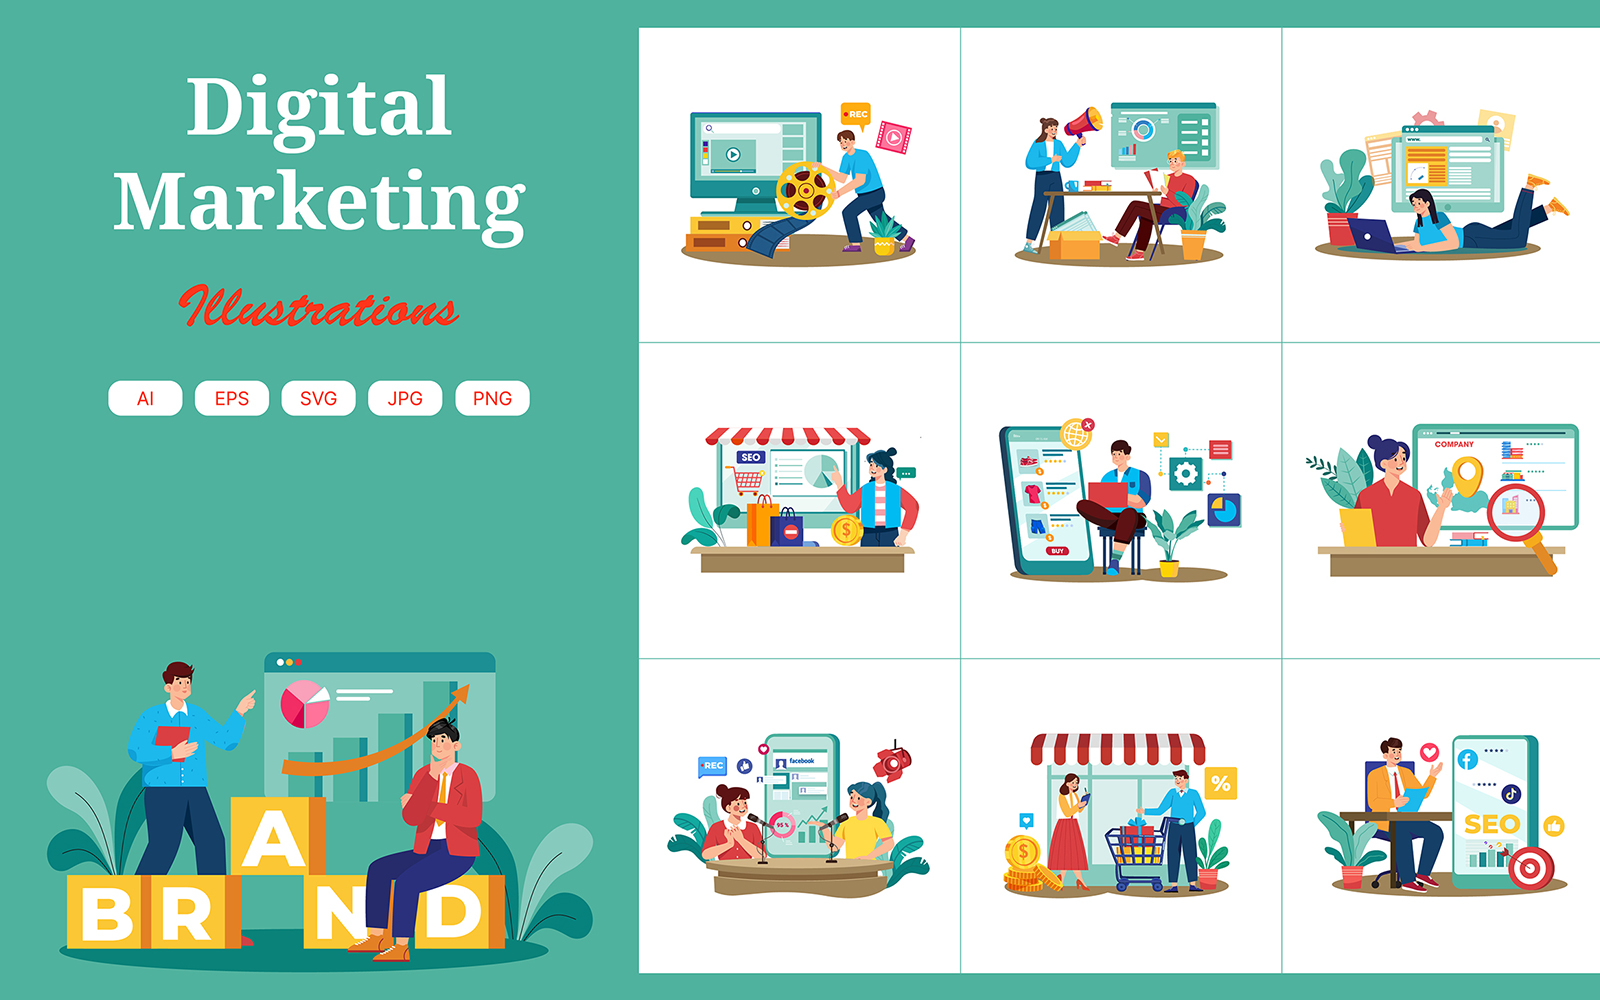 M727_ Digital Marketing Illustration Pack 2